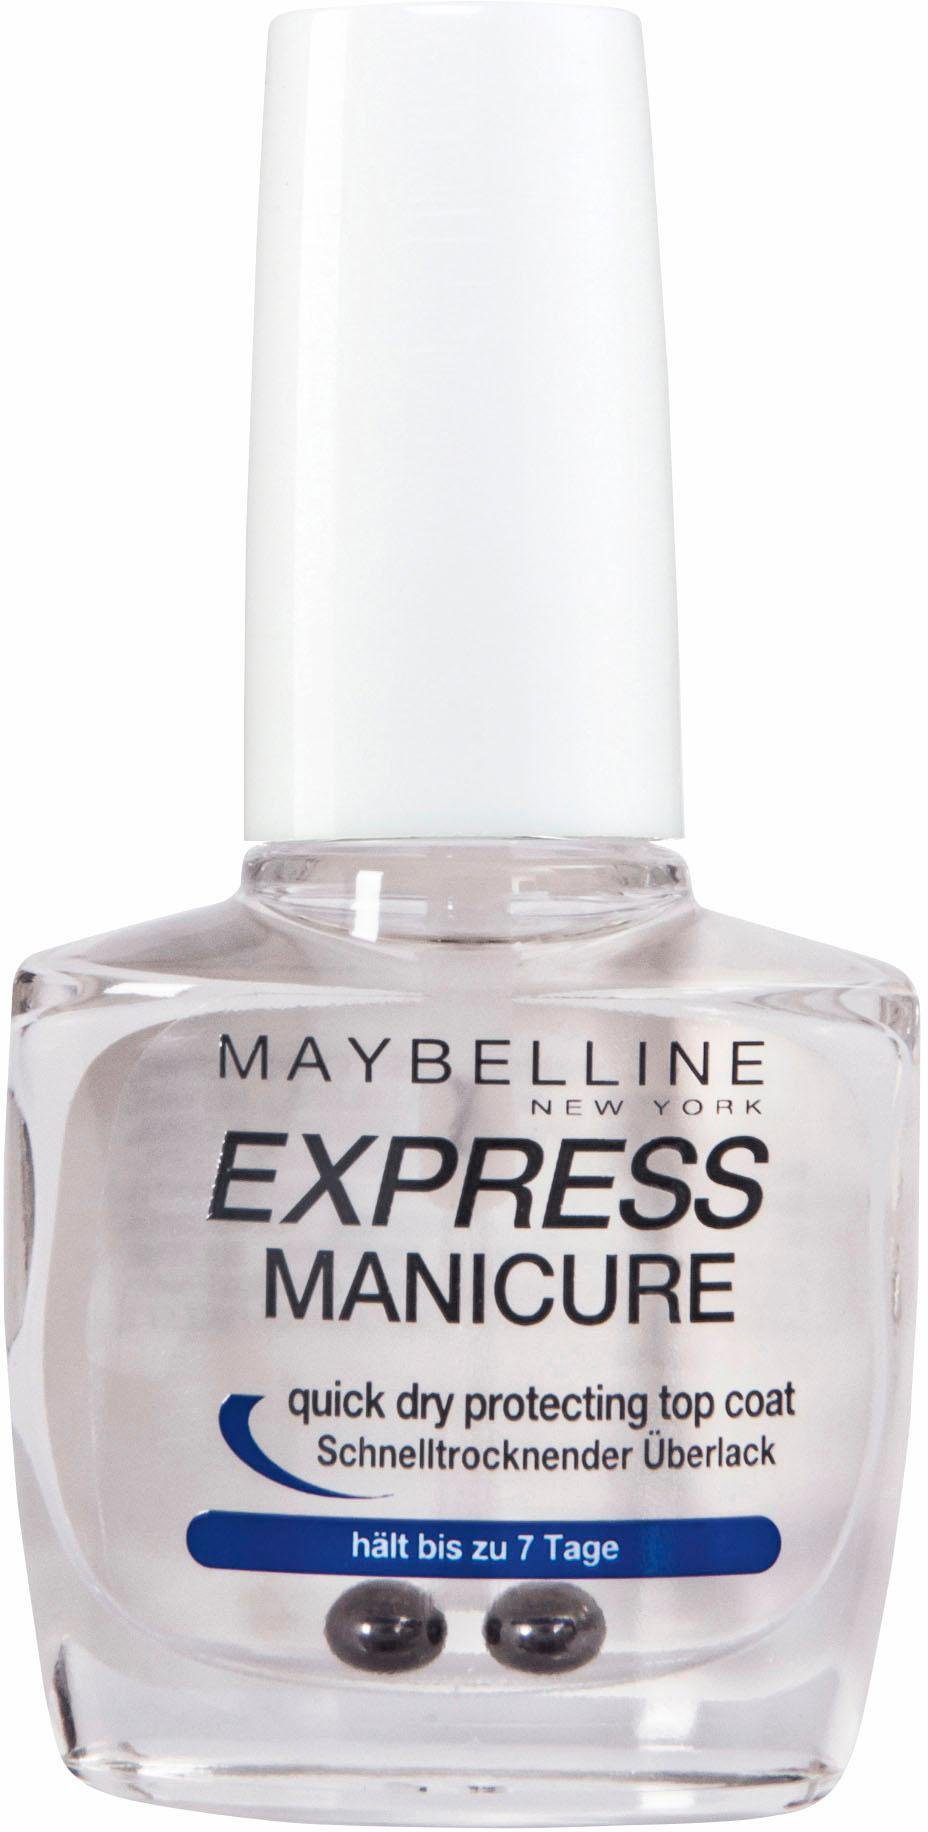 NEW Express Überlack MAYBELLINE YORK Manicure